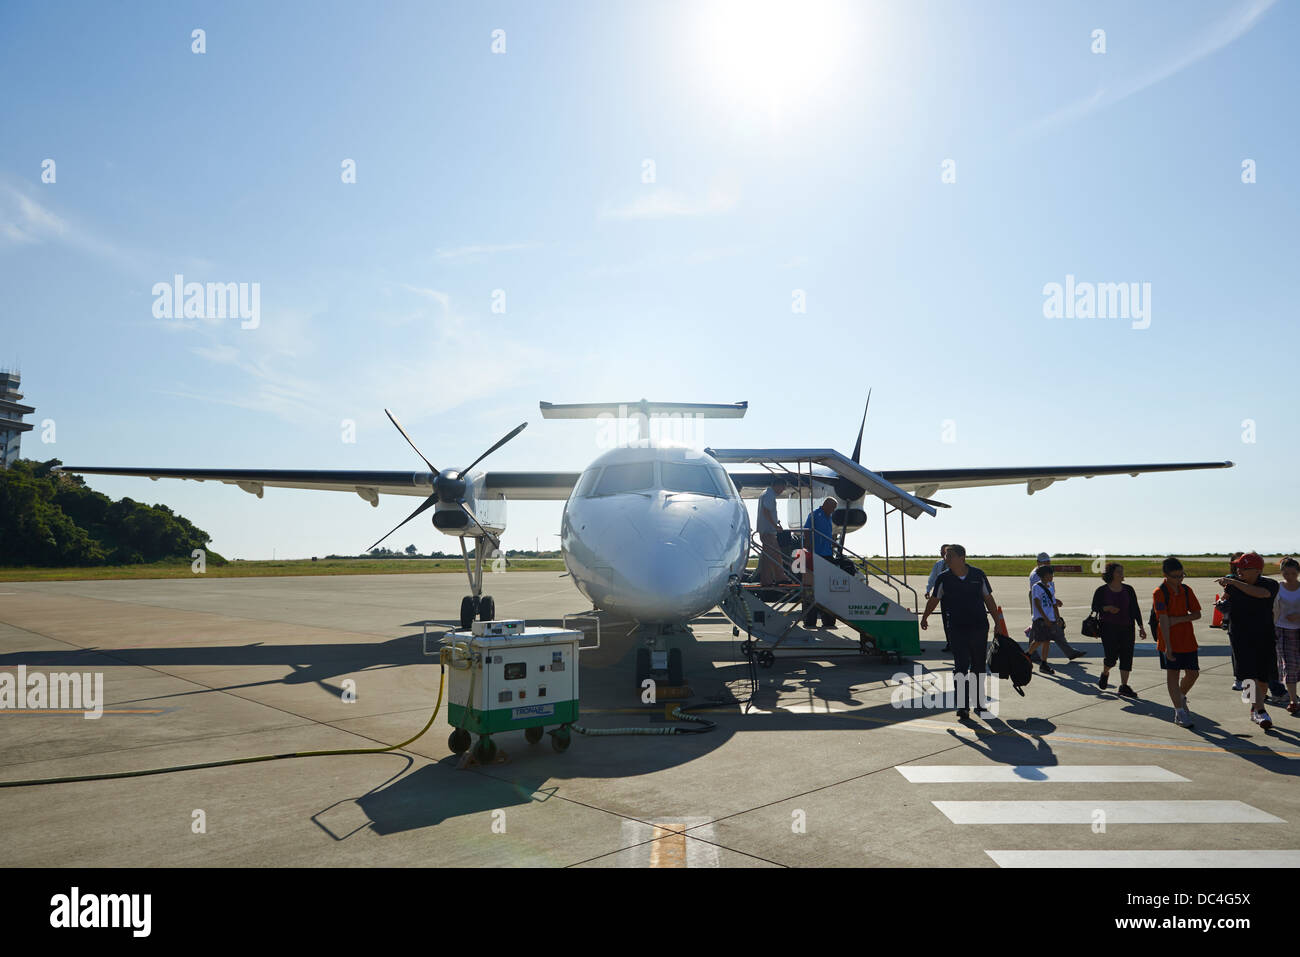 Tourists disembarking a small propeller plane at Matsu Beigan Airport Stock Photo